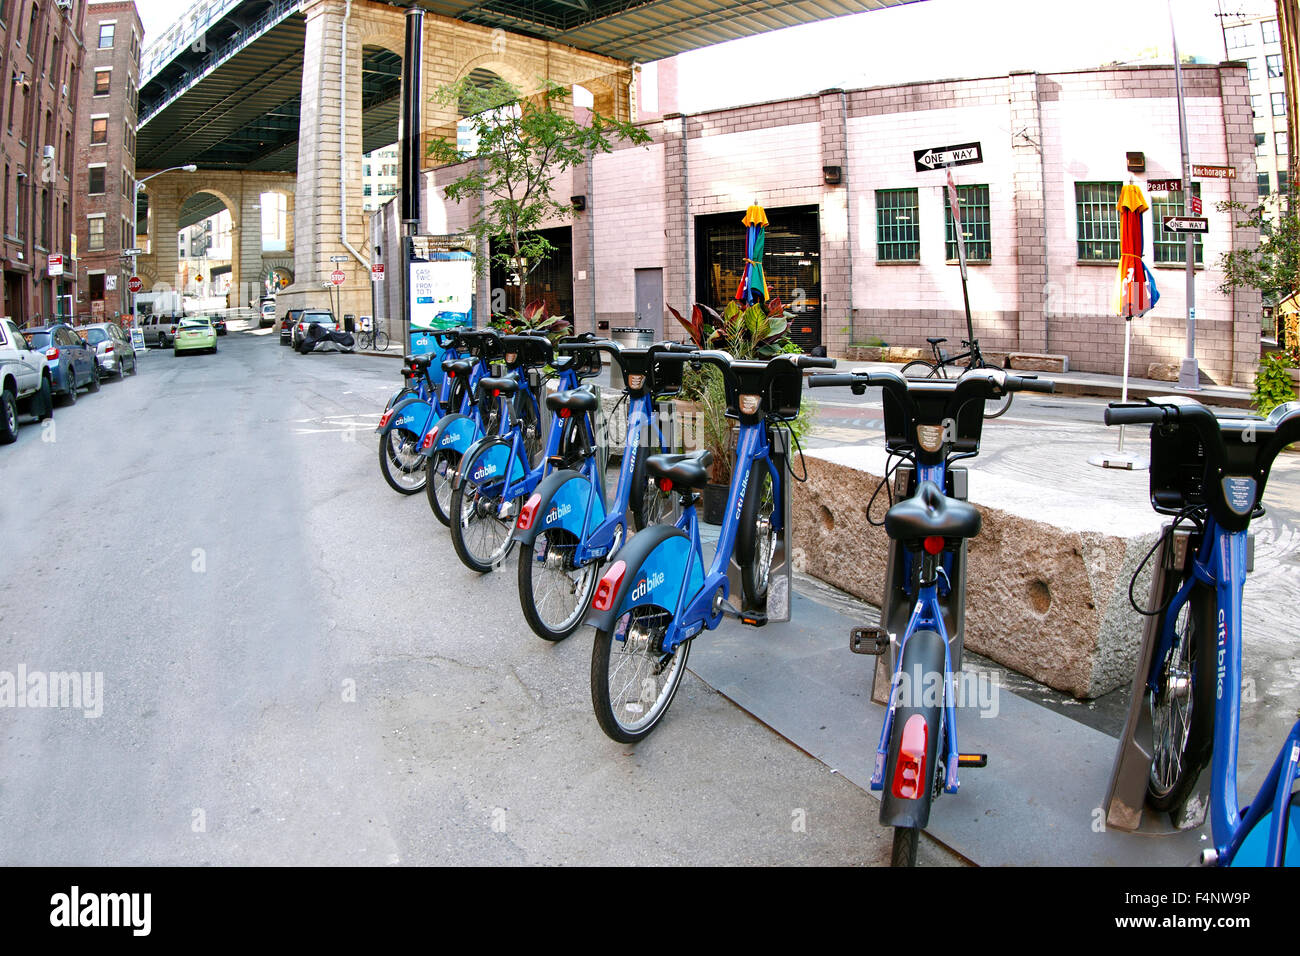 Service de location de vélos vélo Citi alignés dans DUMBO près de Brooklyn New York City Banque D'Images